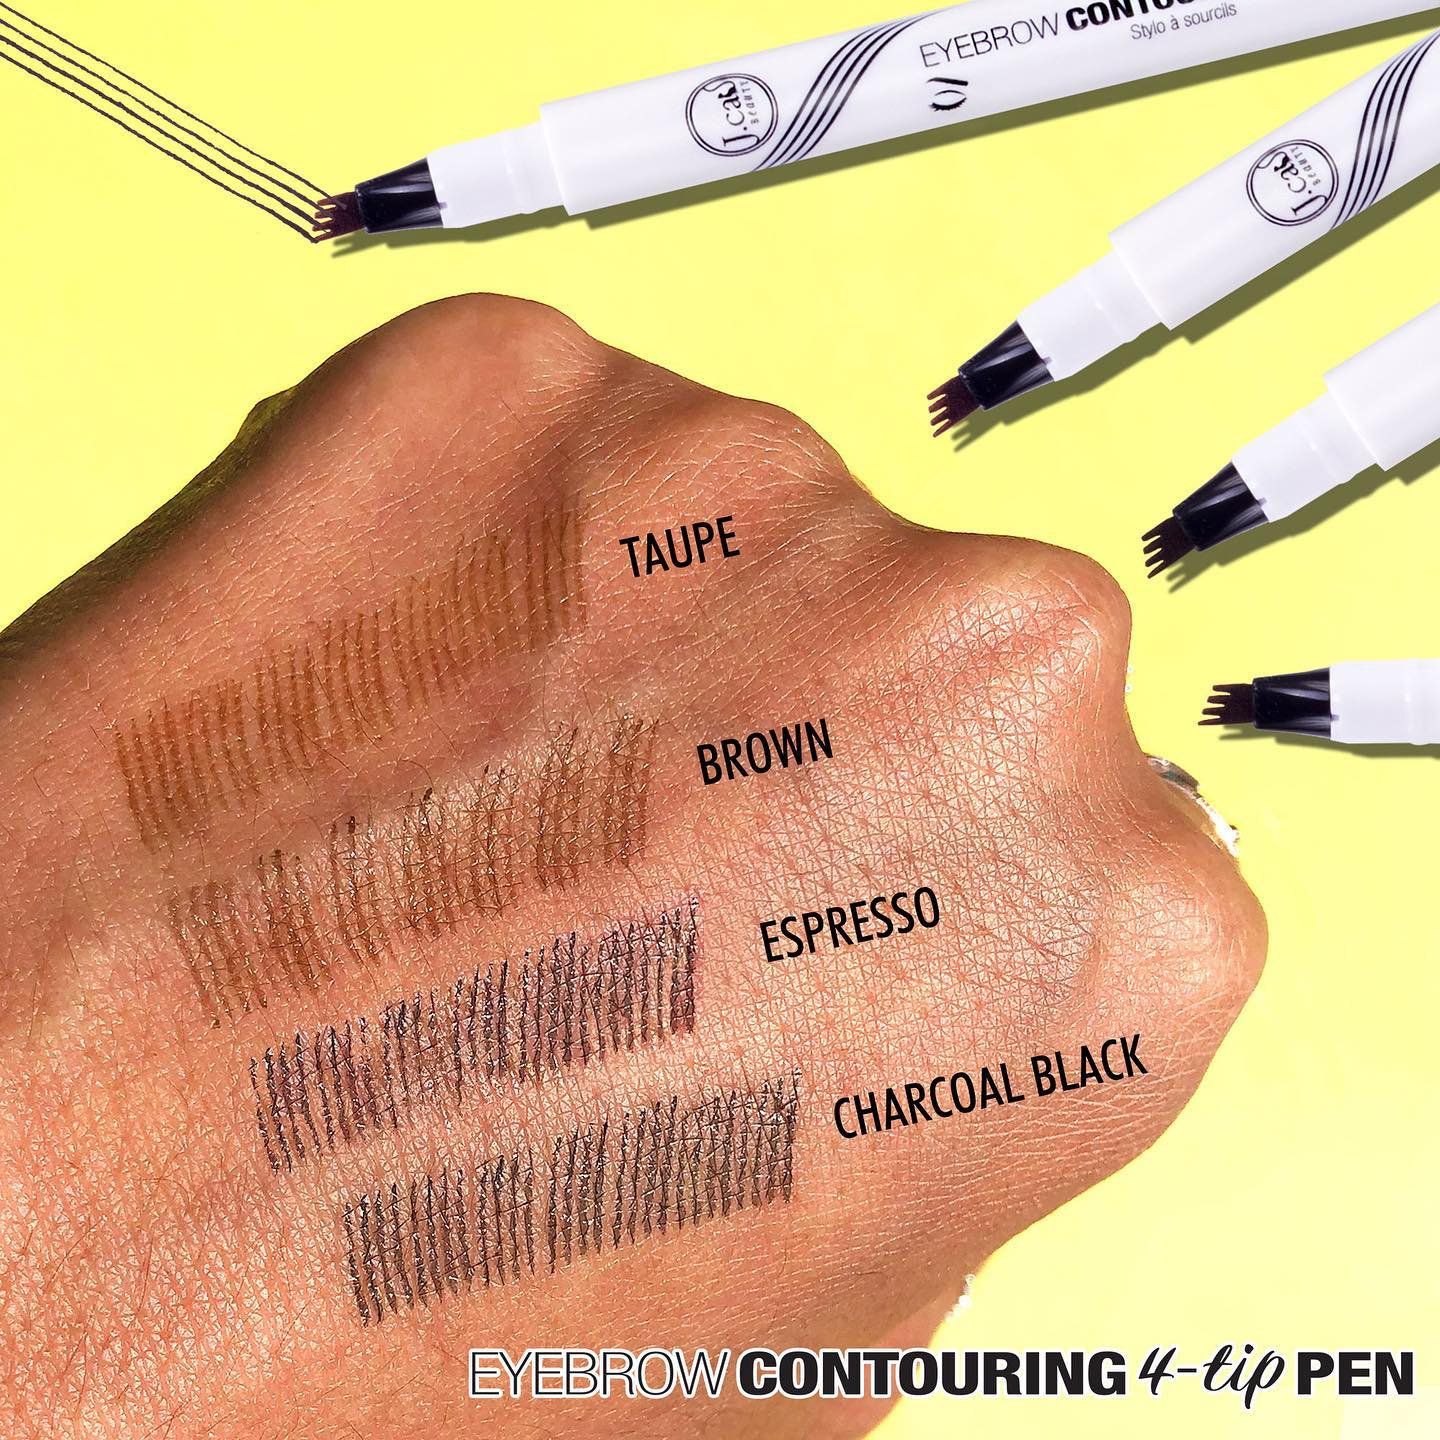 J.Cat Beauty - Eyebrow Contouring 4-Tip Pen Taupe